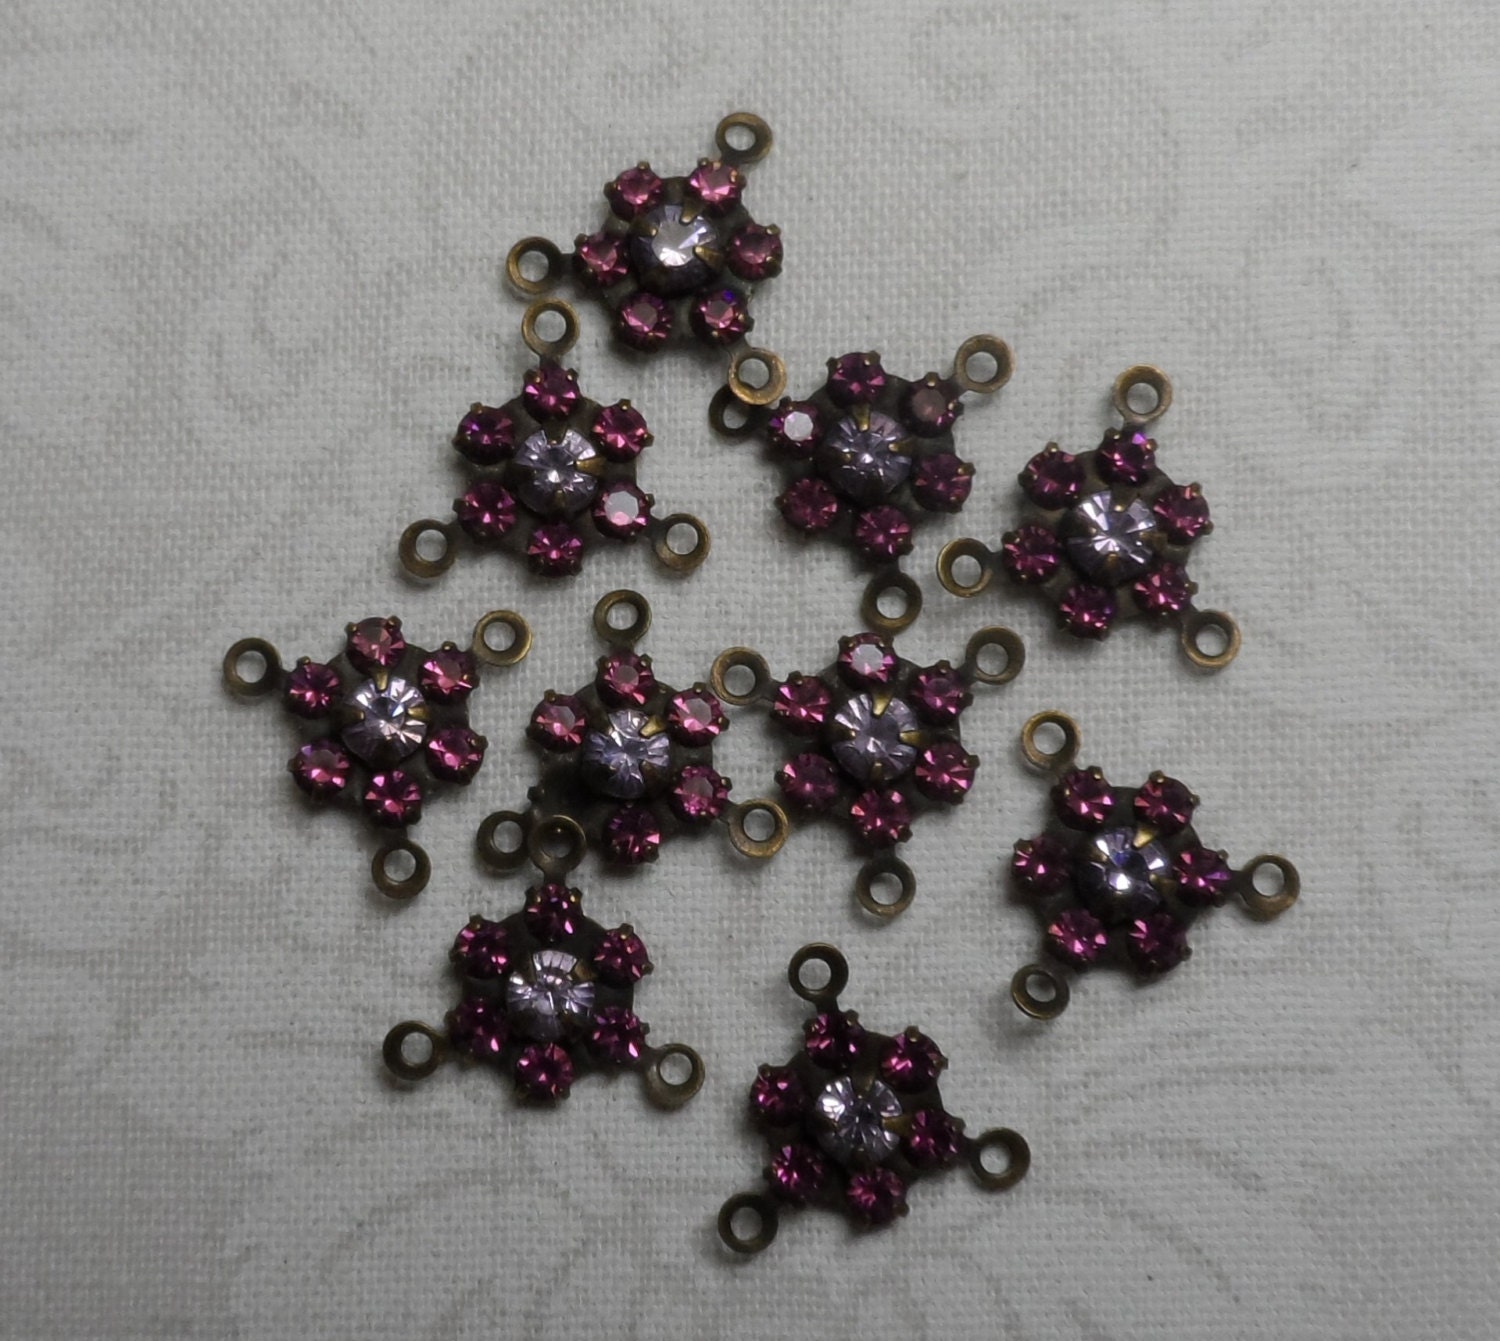 Swarovski crystal rhinestone 8mm- mini clusters with 3 rings,tanzanite